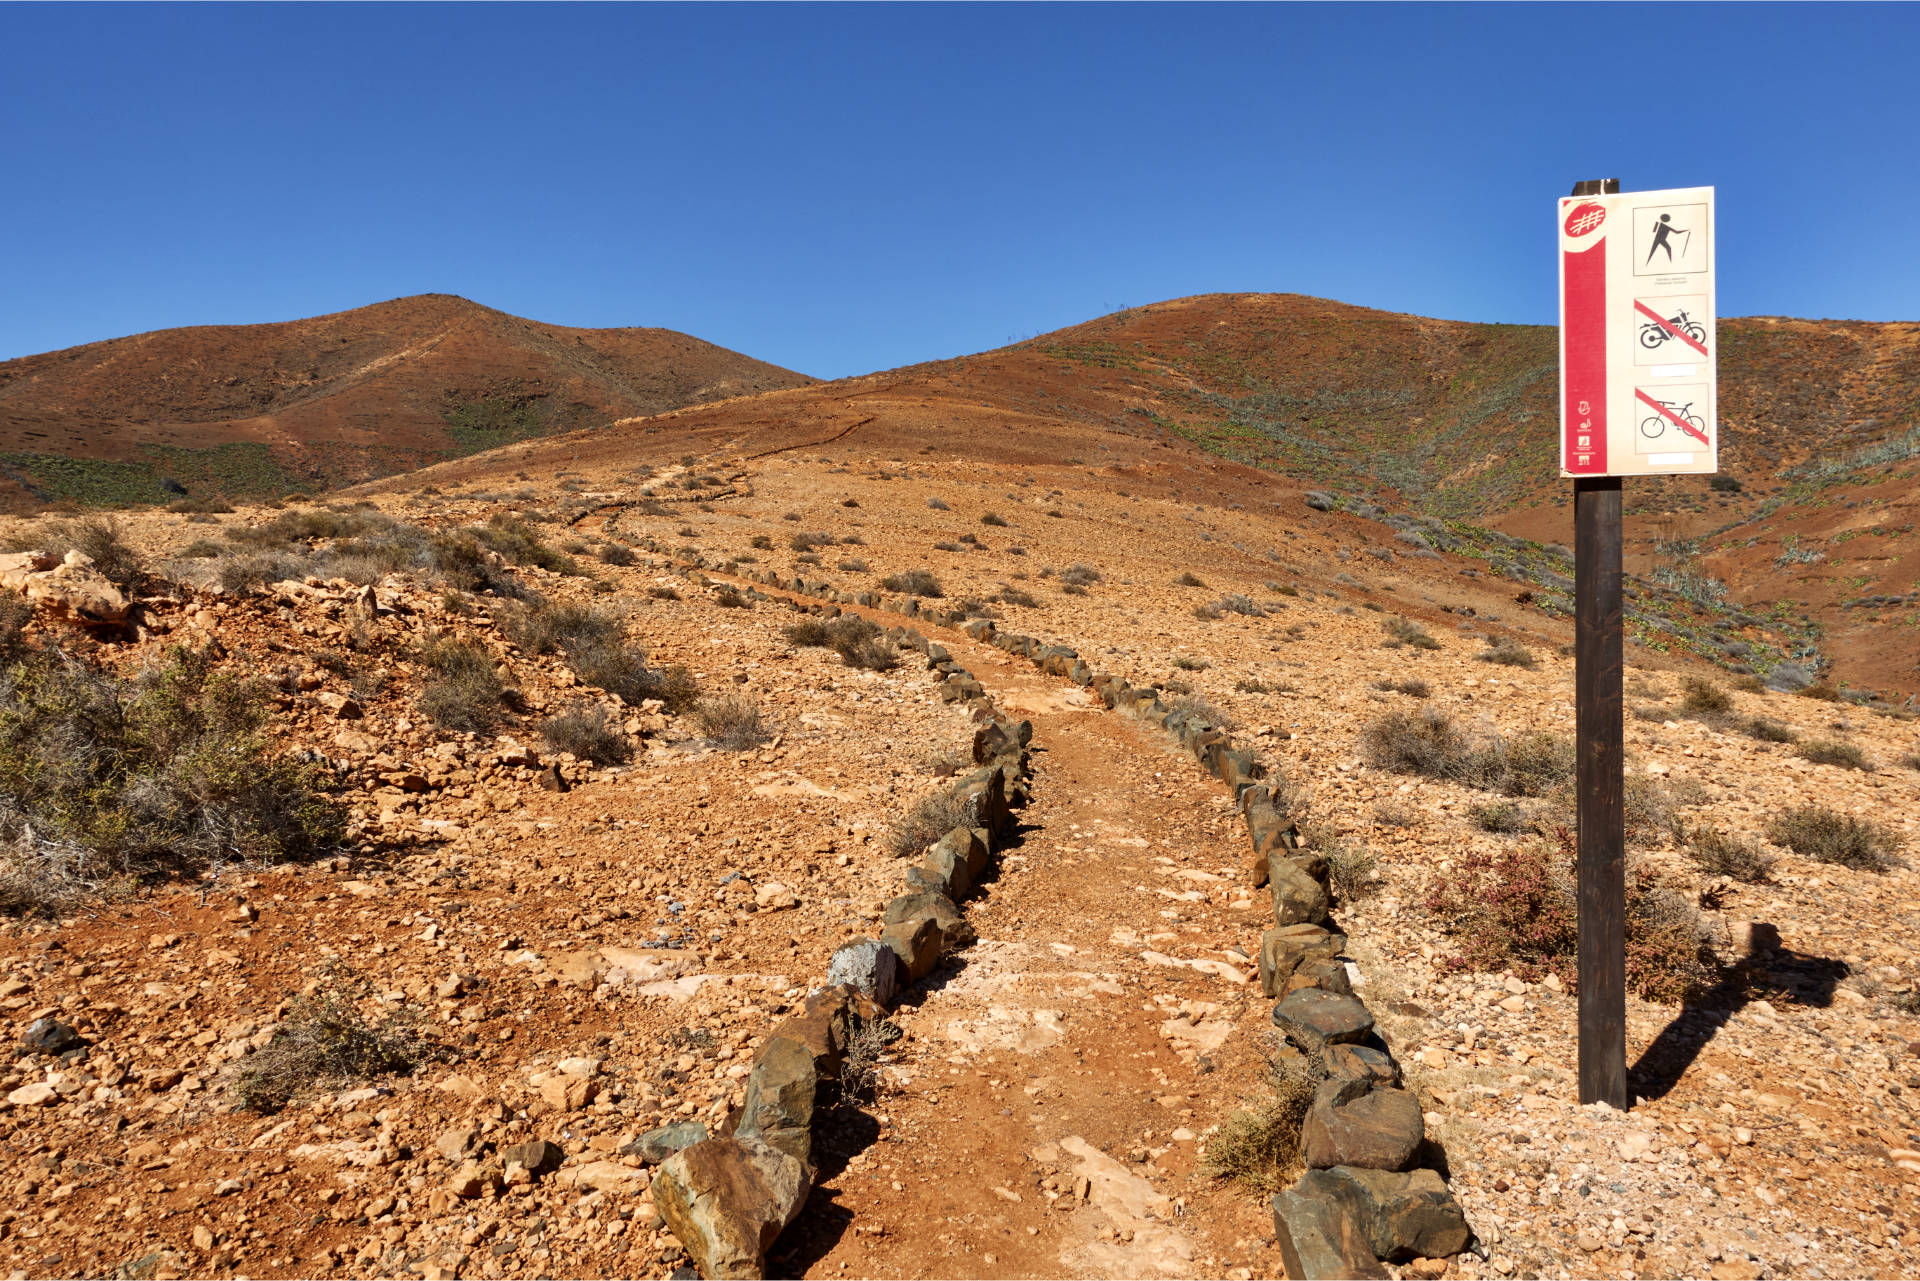 Beginn, Ende des Camino natural zwischen Vega de Río Palmas und Tiscamanita.